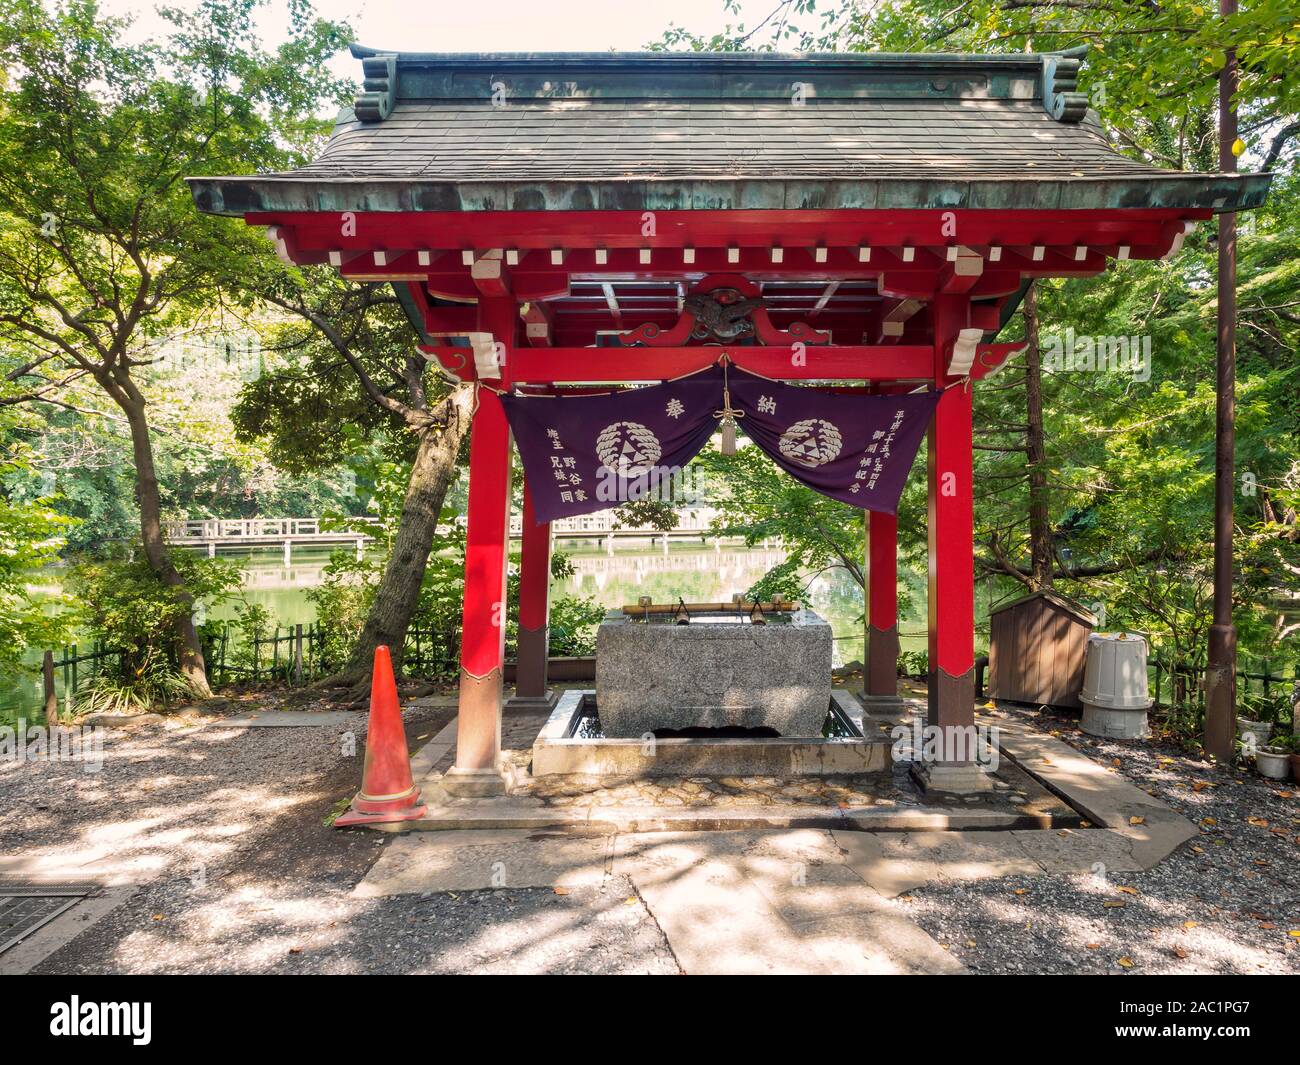 A chōzuya hand washing pavilion at a shrine in Japan. Stock Photo